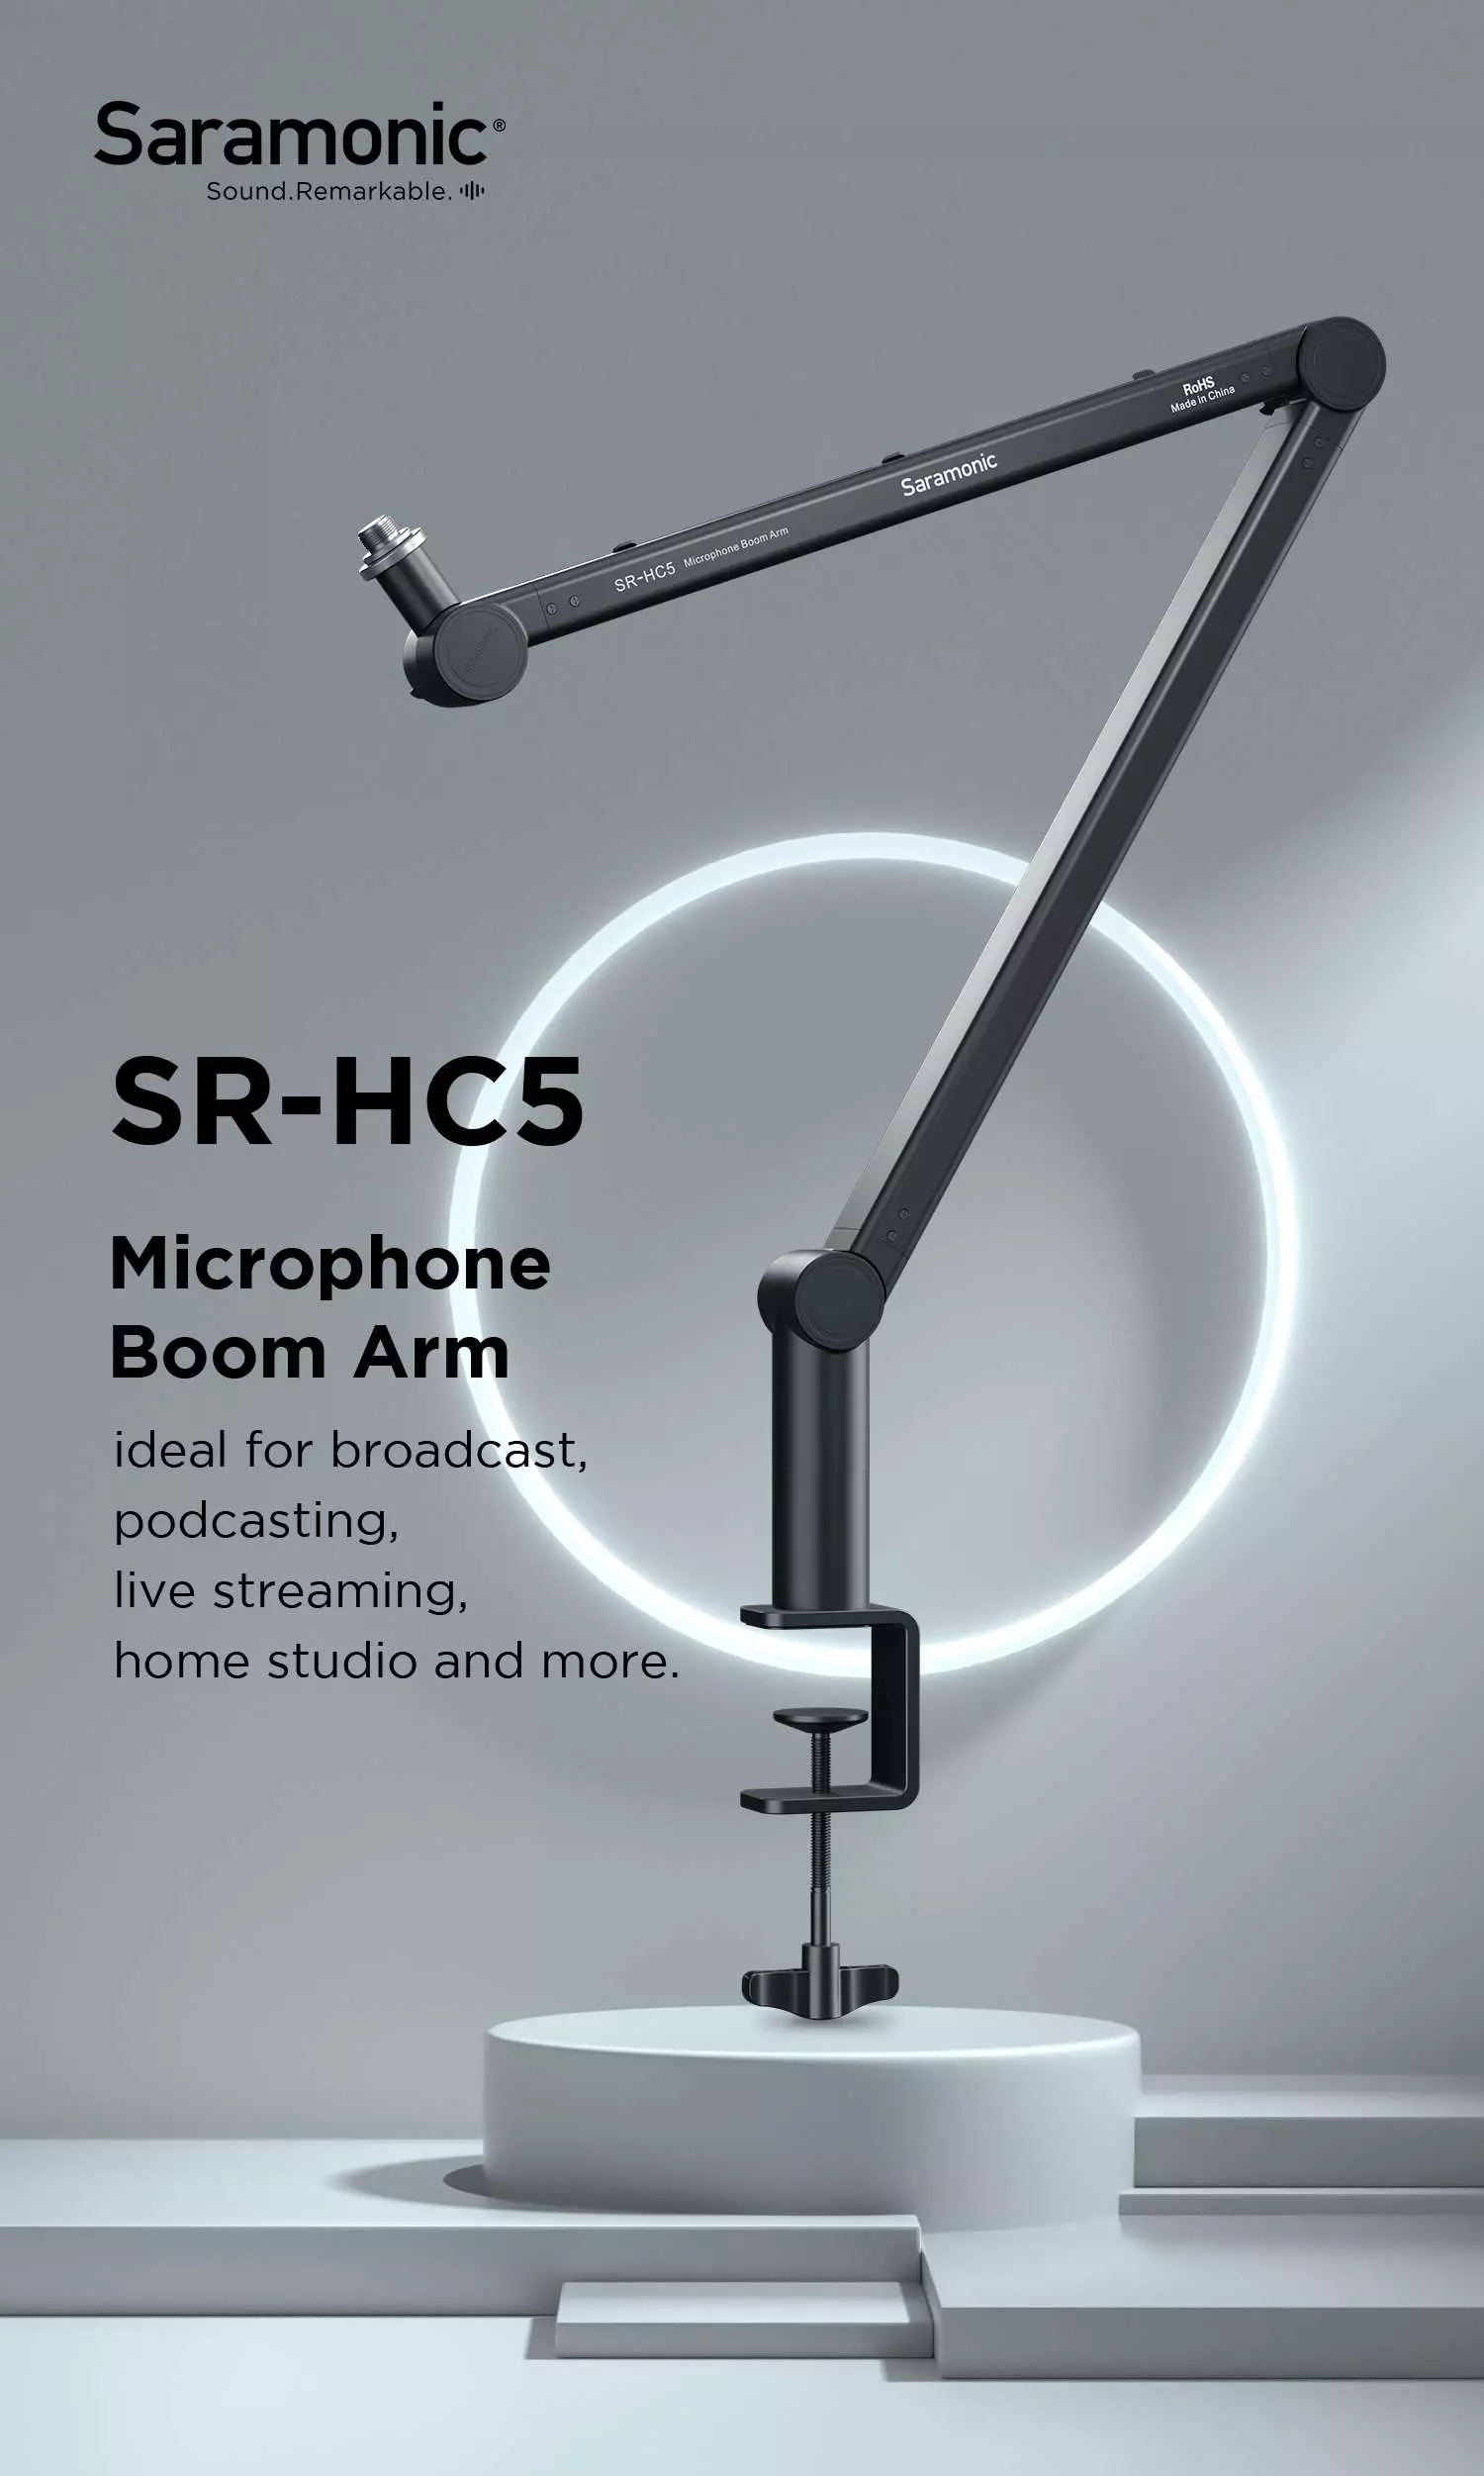 Saramonic SR-HC5 Microphone Boom Arm